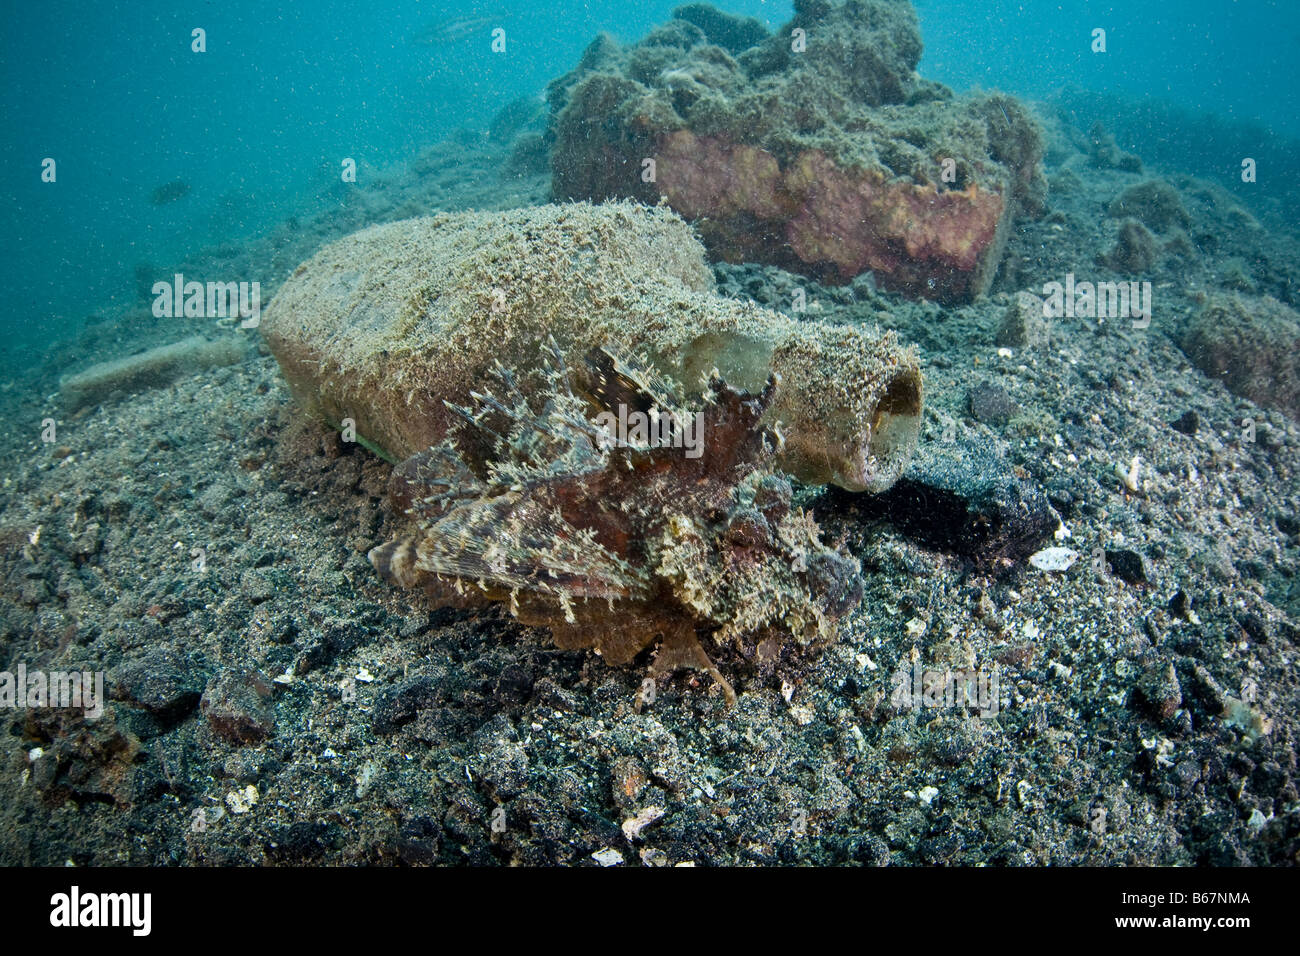 Venemous Spiny Devilfish Inimicus didactylus Micronesia Pacific Ocean Palau Stock Photo